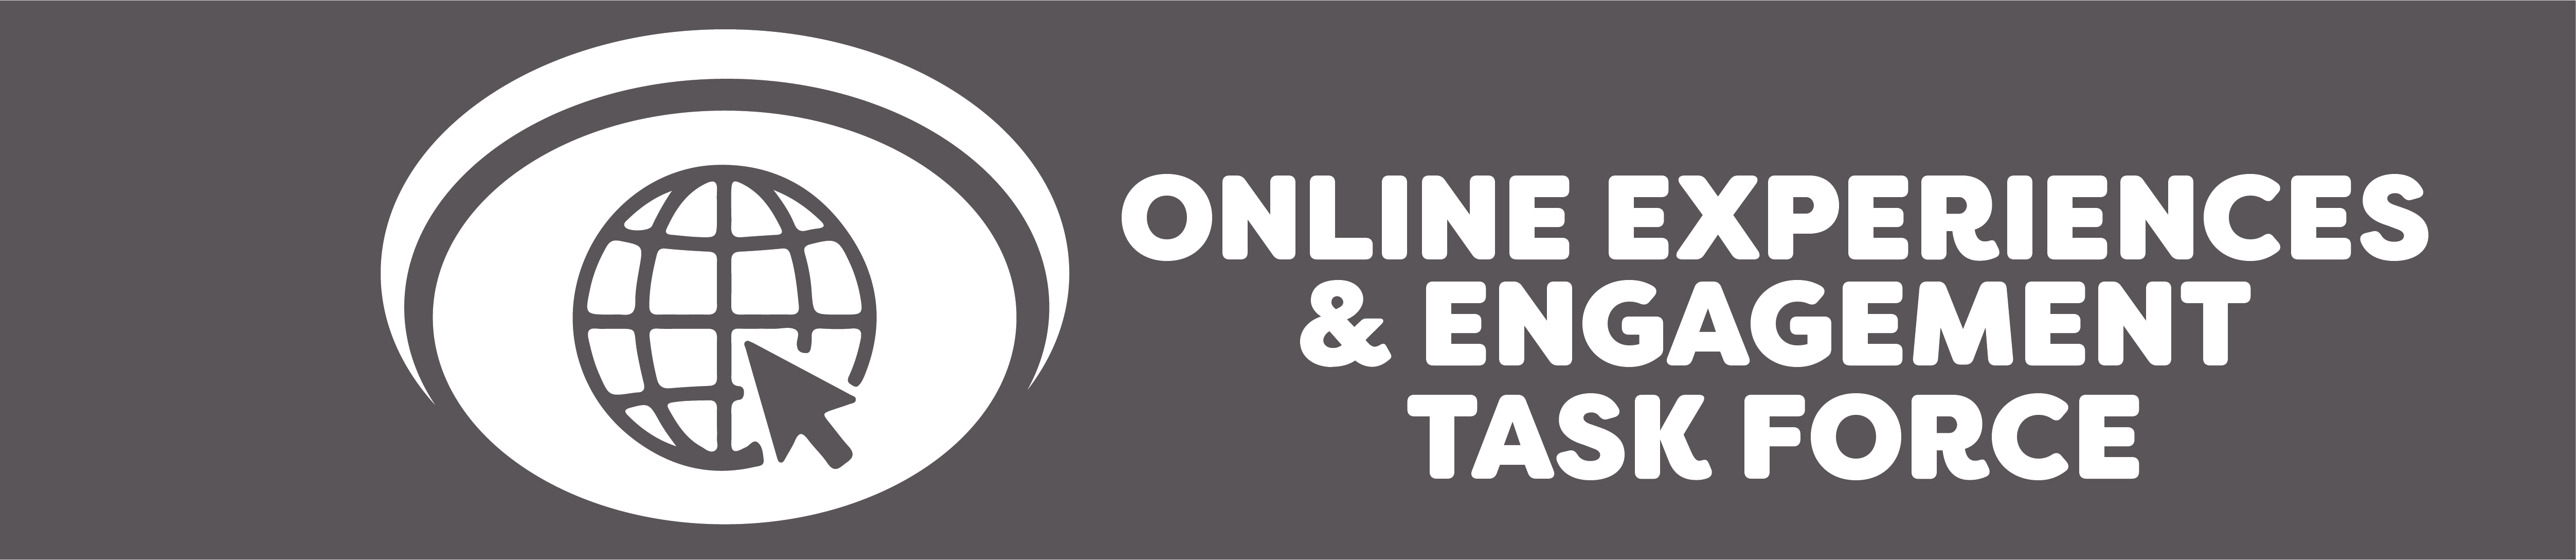 Online Experiences & Engagement Task Force